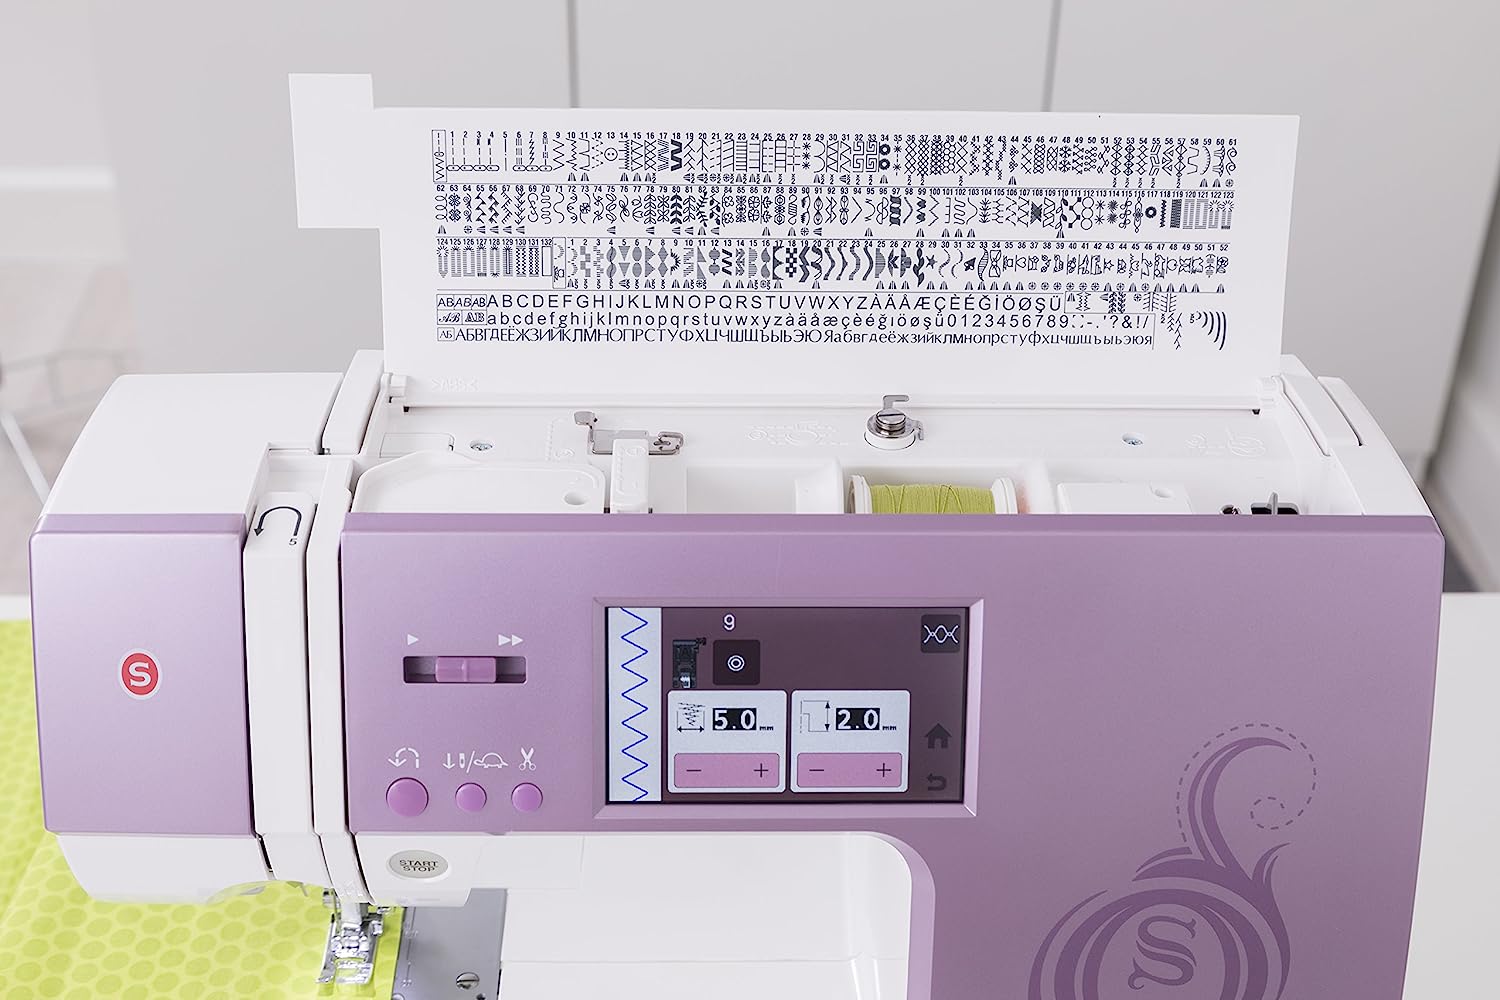 Singer 9985 Quantum Stylist™ Sewing Machine stitches